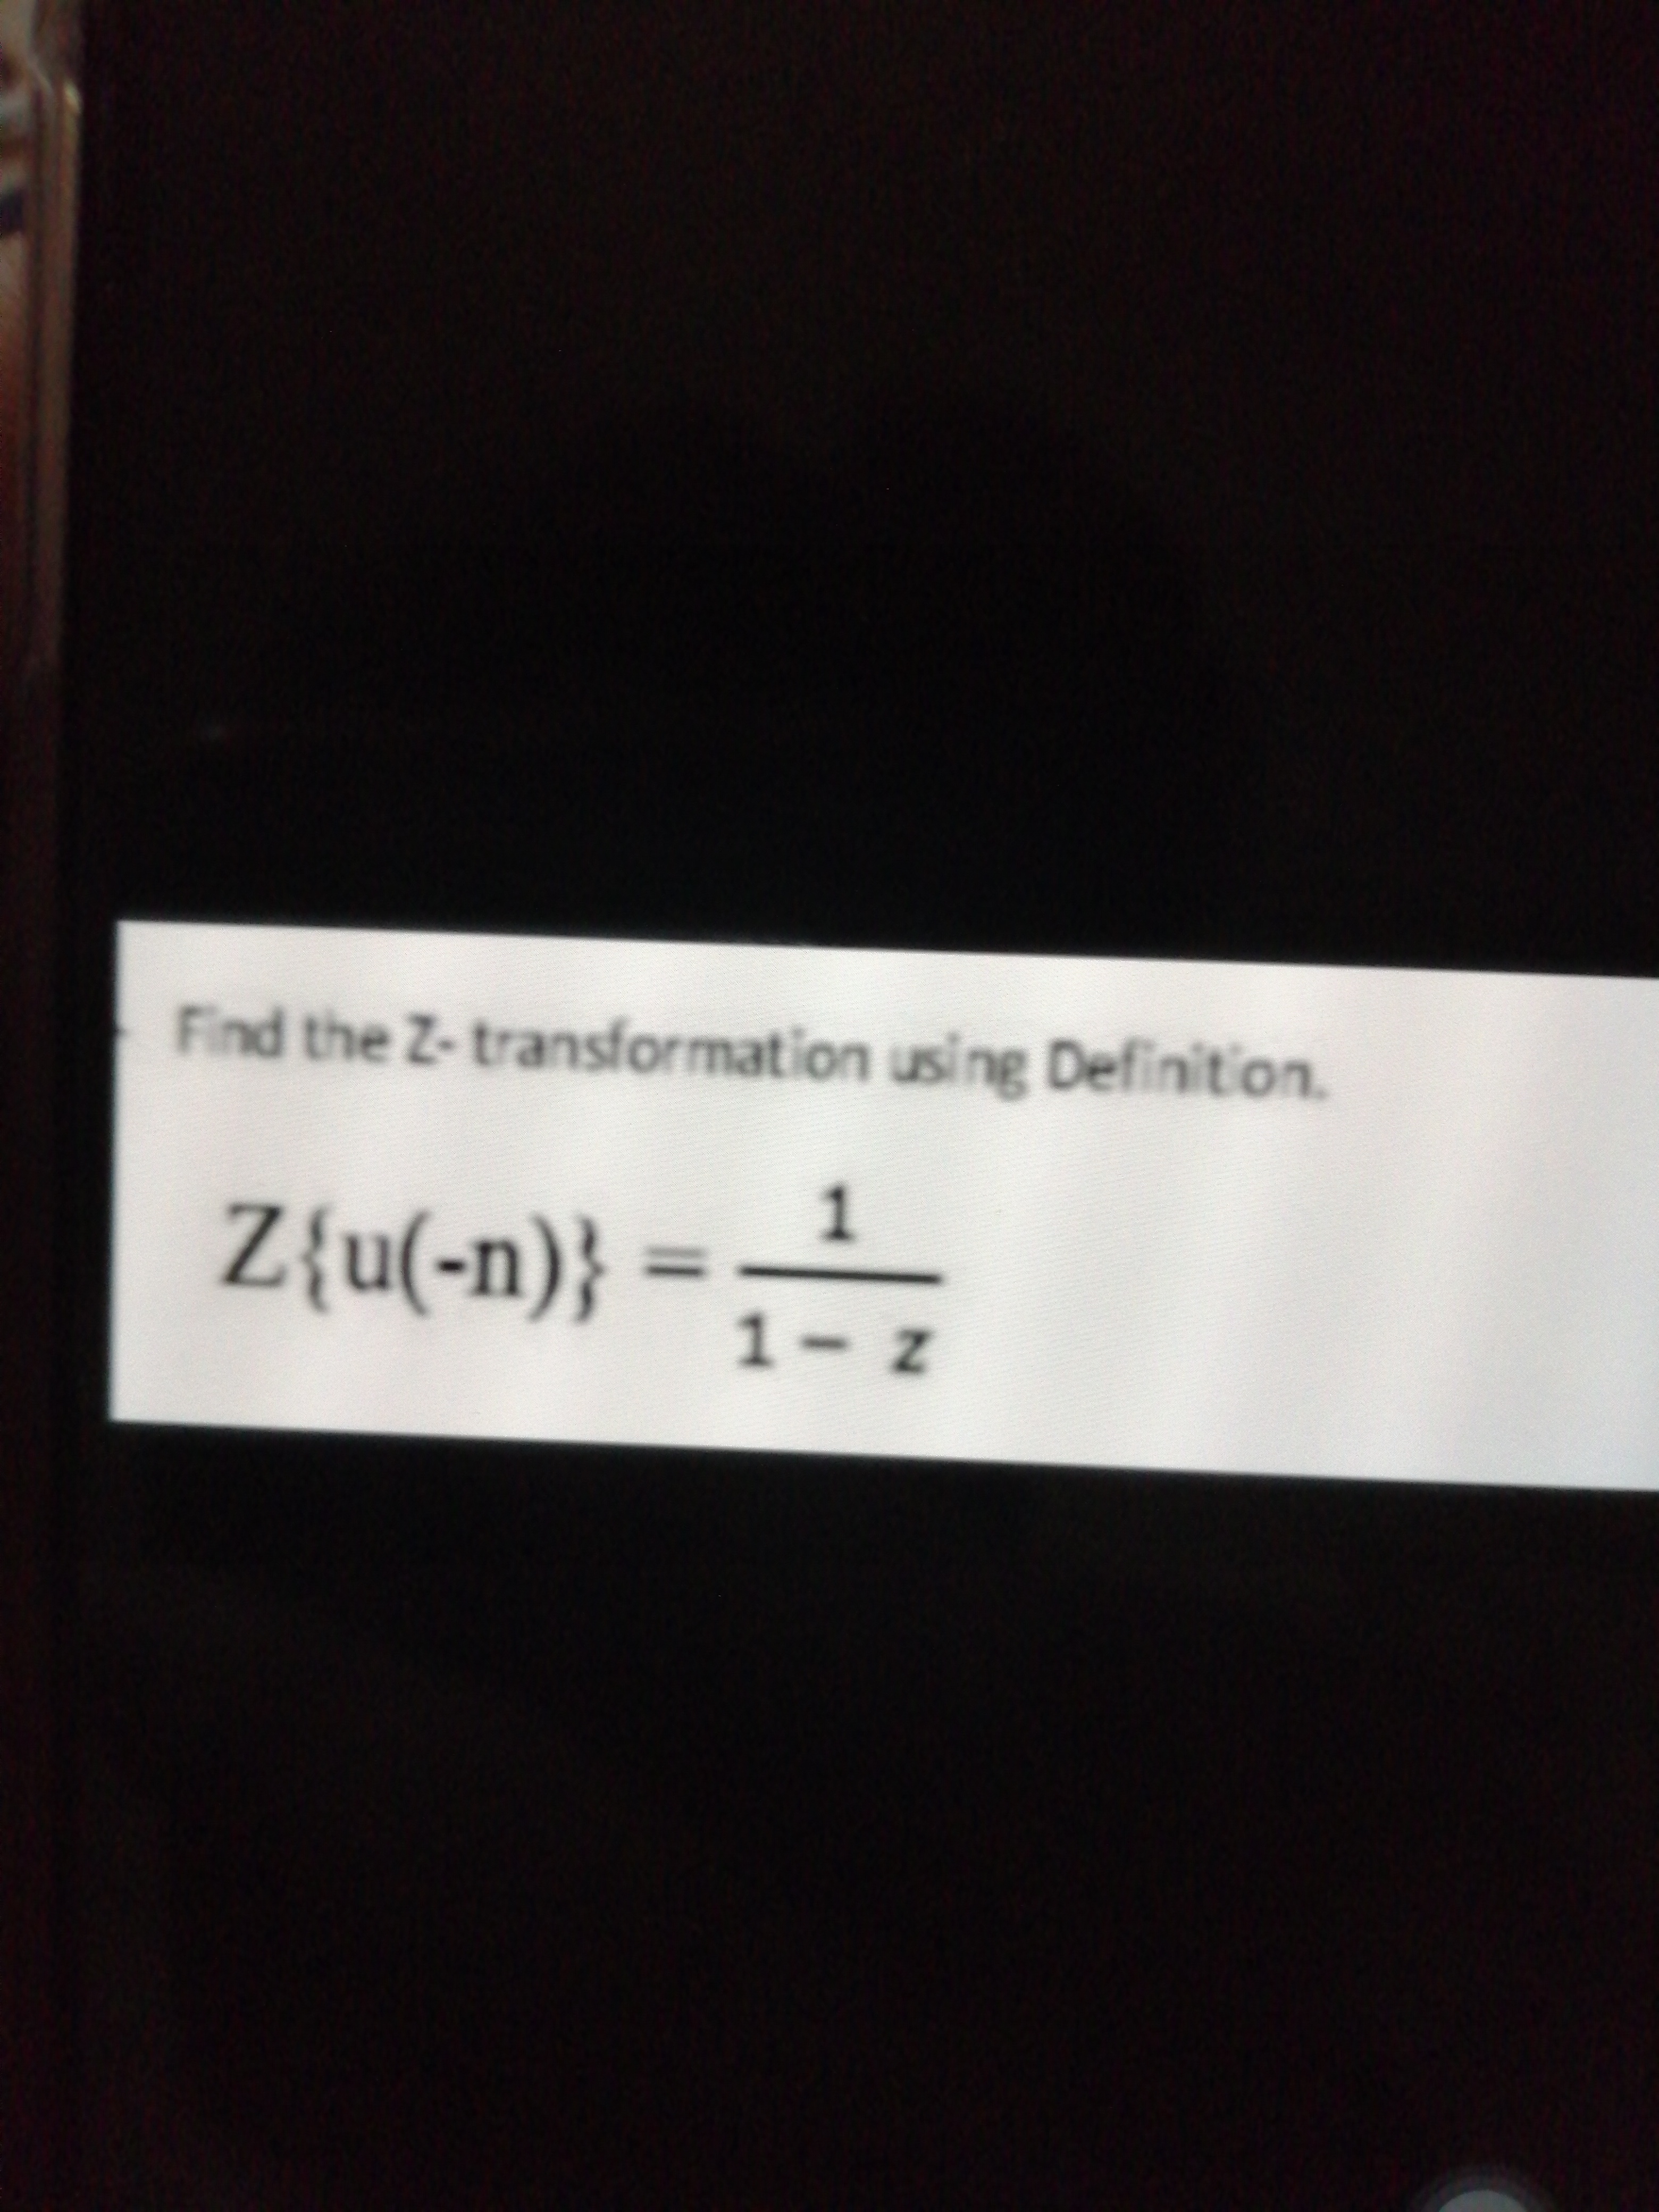 Find the Z-transformation using Definition.
Z{u(-n)} =,-
%3D
1-Z
